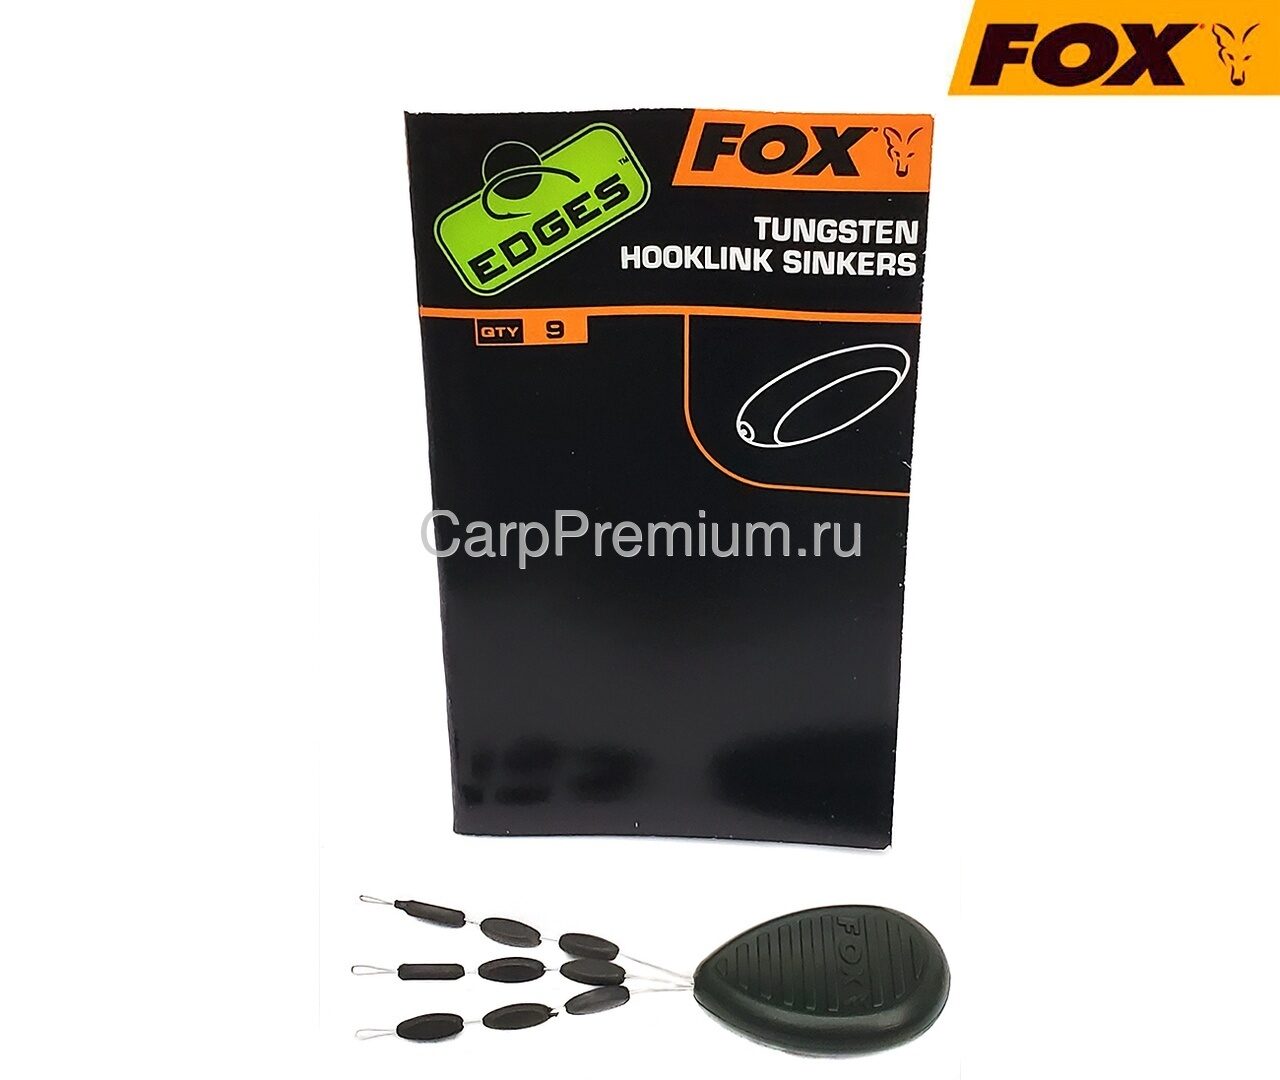 Стопора утяжеленные, огрузка поводка Fox (Фокс) - EDGES Tungsten Mainline Sinkers, 9 шт